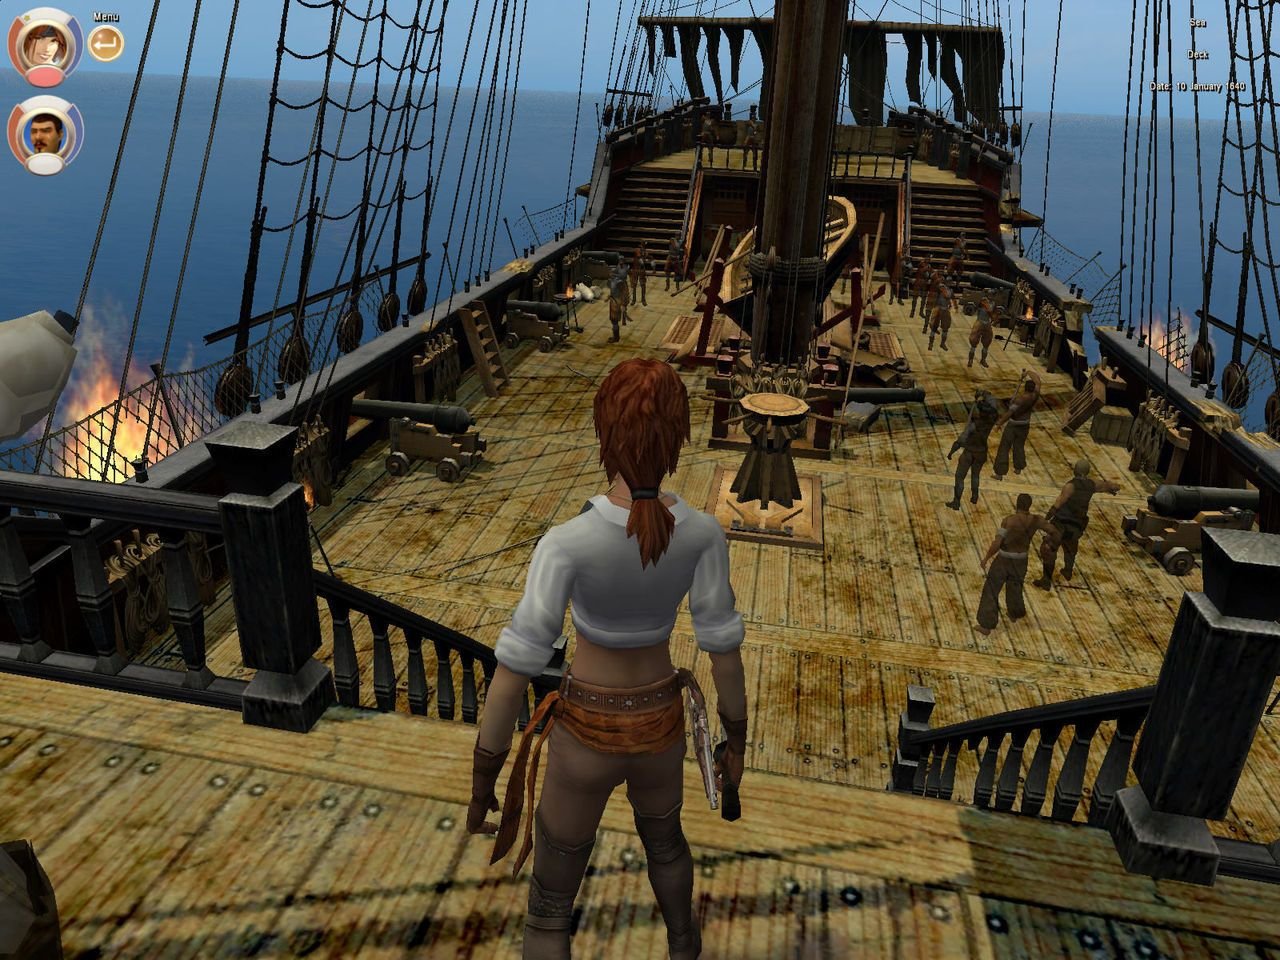 Игра пираты с открытым миром. Игра Корсары 2 пираты Карибского моря. Корсары 3 пираты Карибского моря. Корсары 3 / age of Pirates: Caribbean Tales. Pirates of the Caribbean 3 игра.